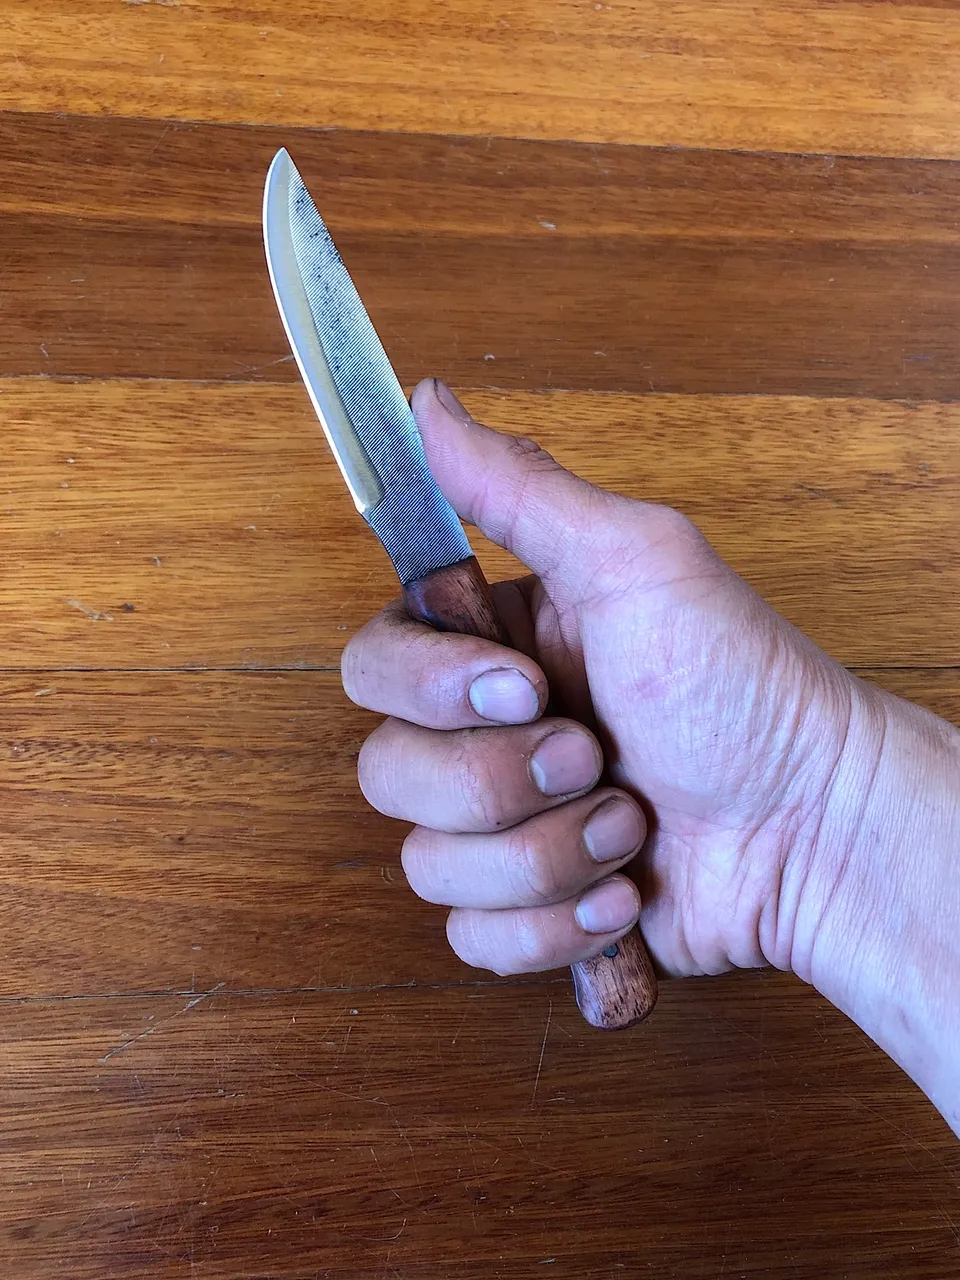 Holding my homemade knife